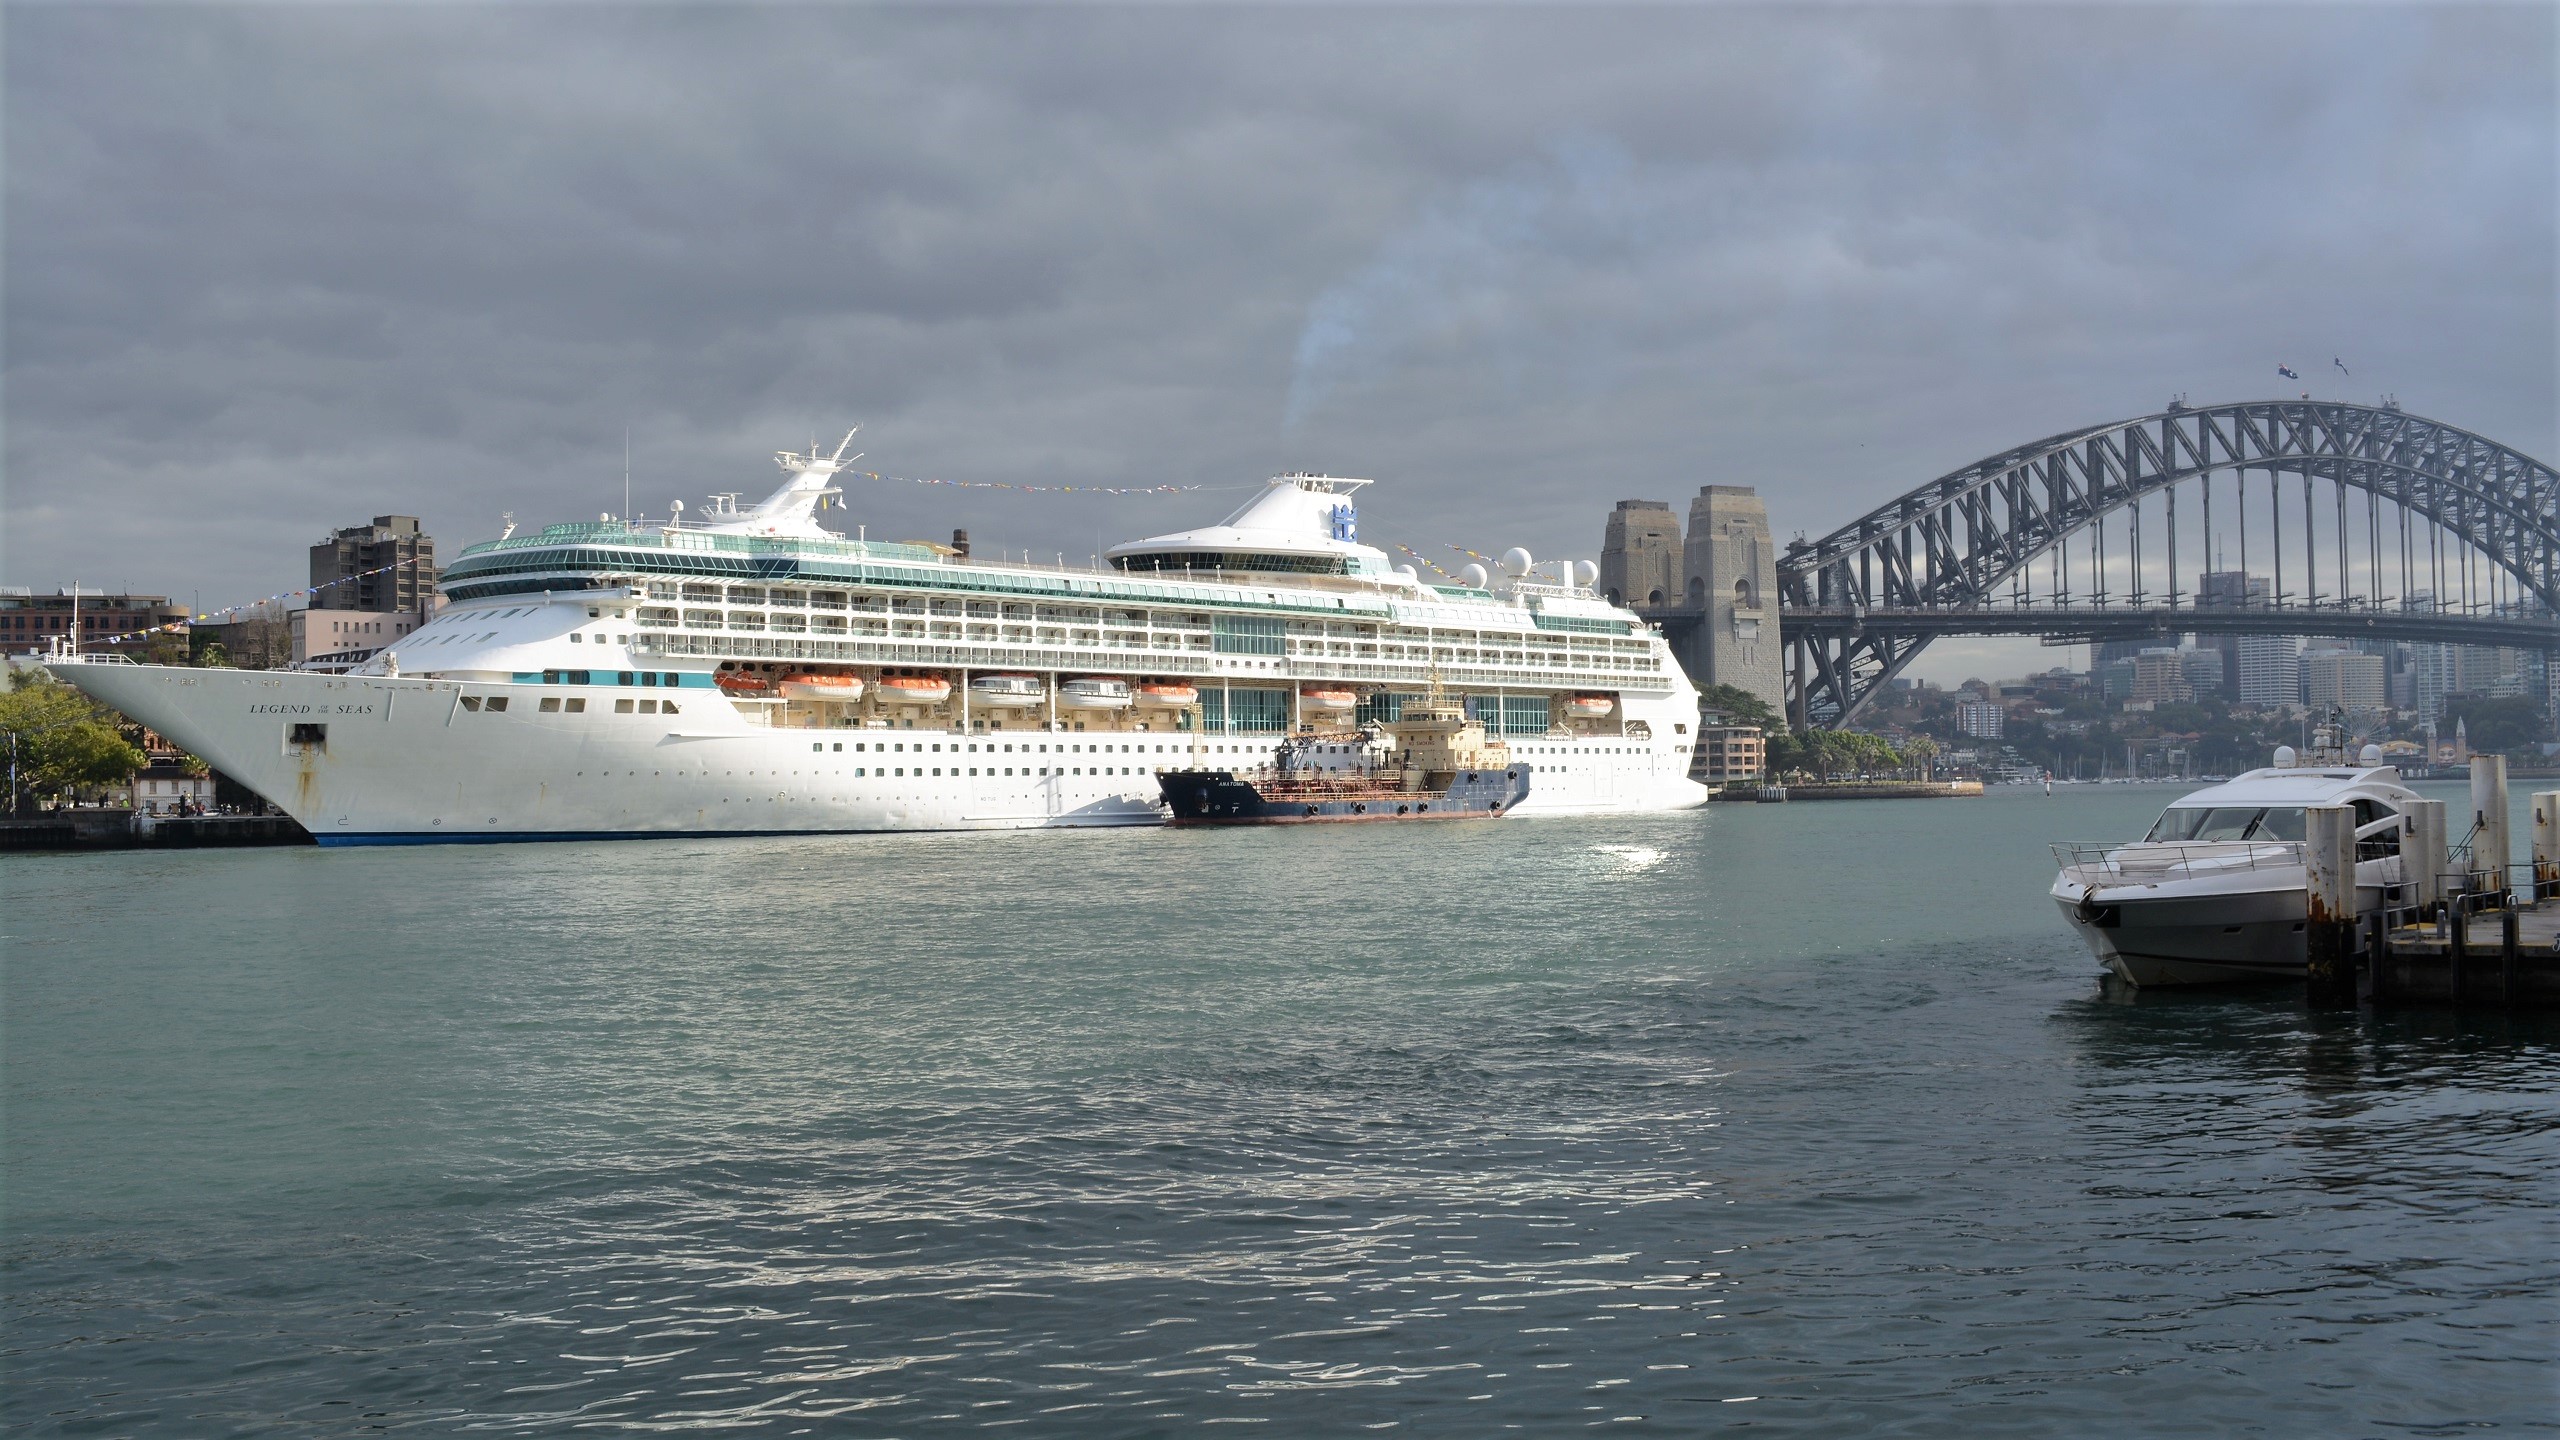 Legend of the Seas Docked in Sydney Harbour Australia by lonewolf6738